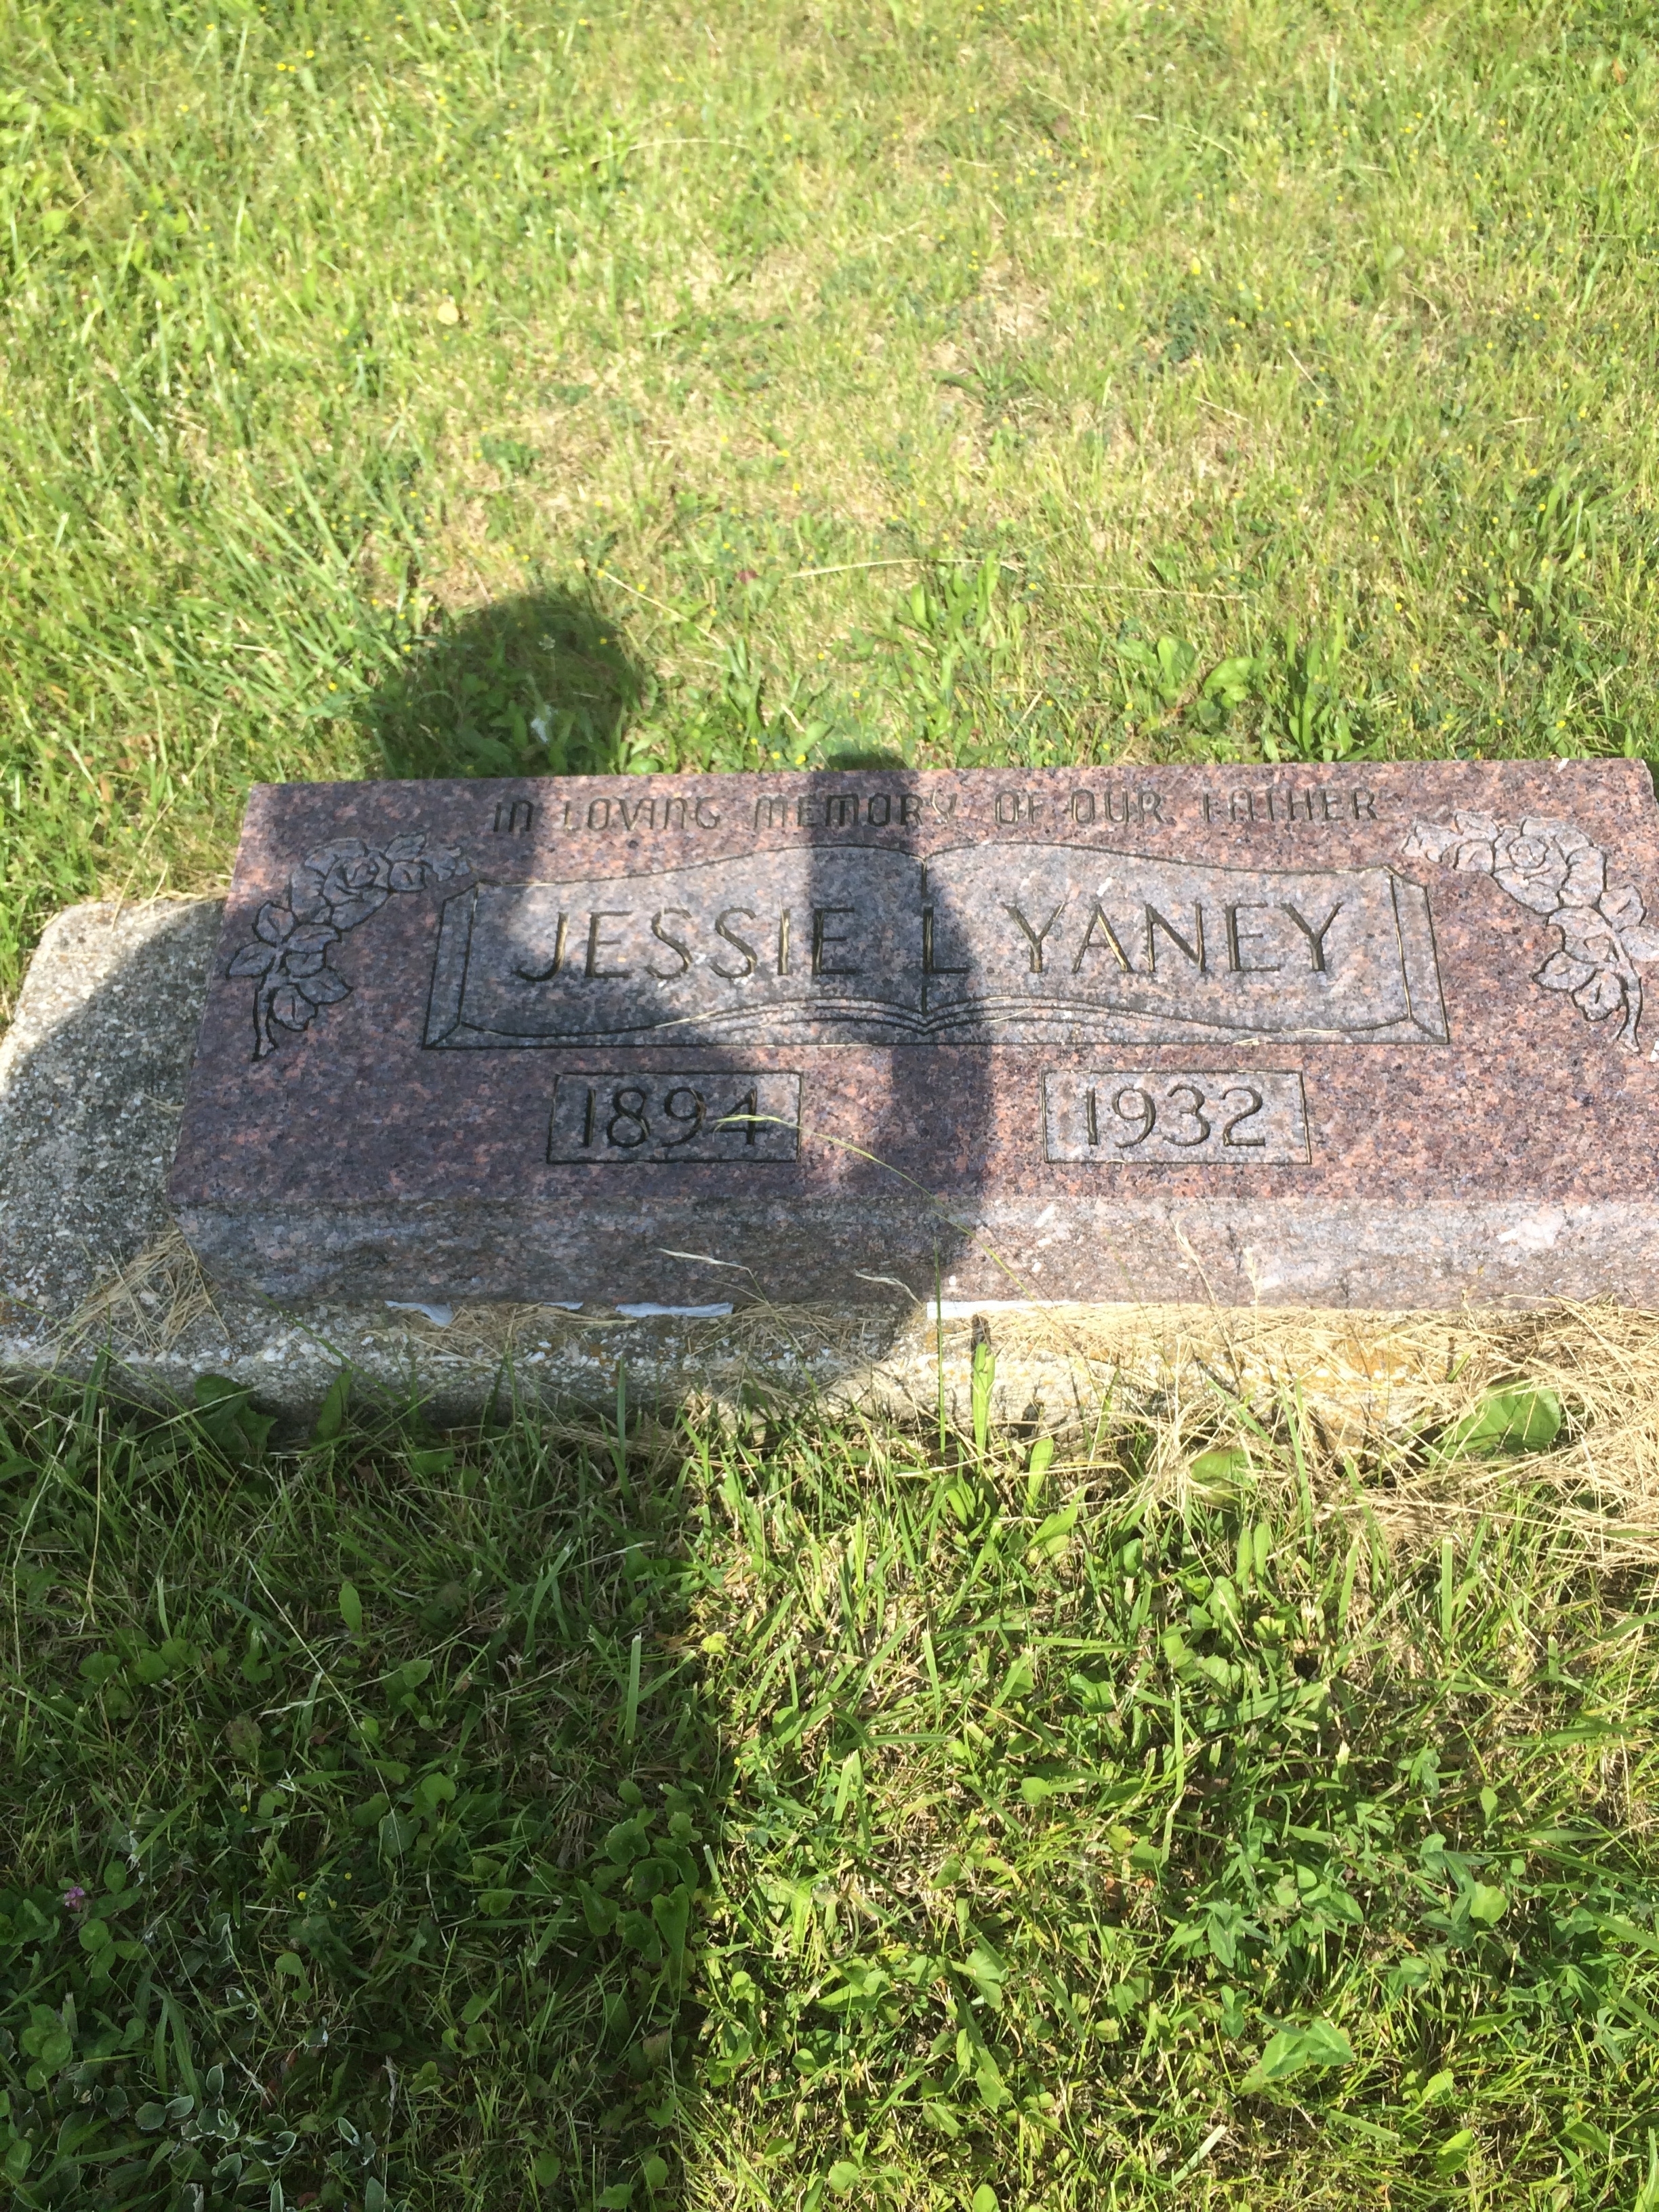 Jessie L. Yaney Gravesite